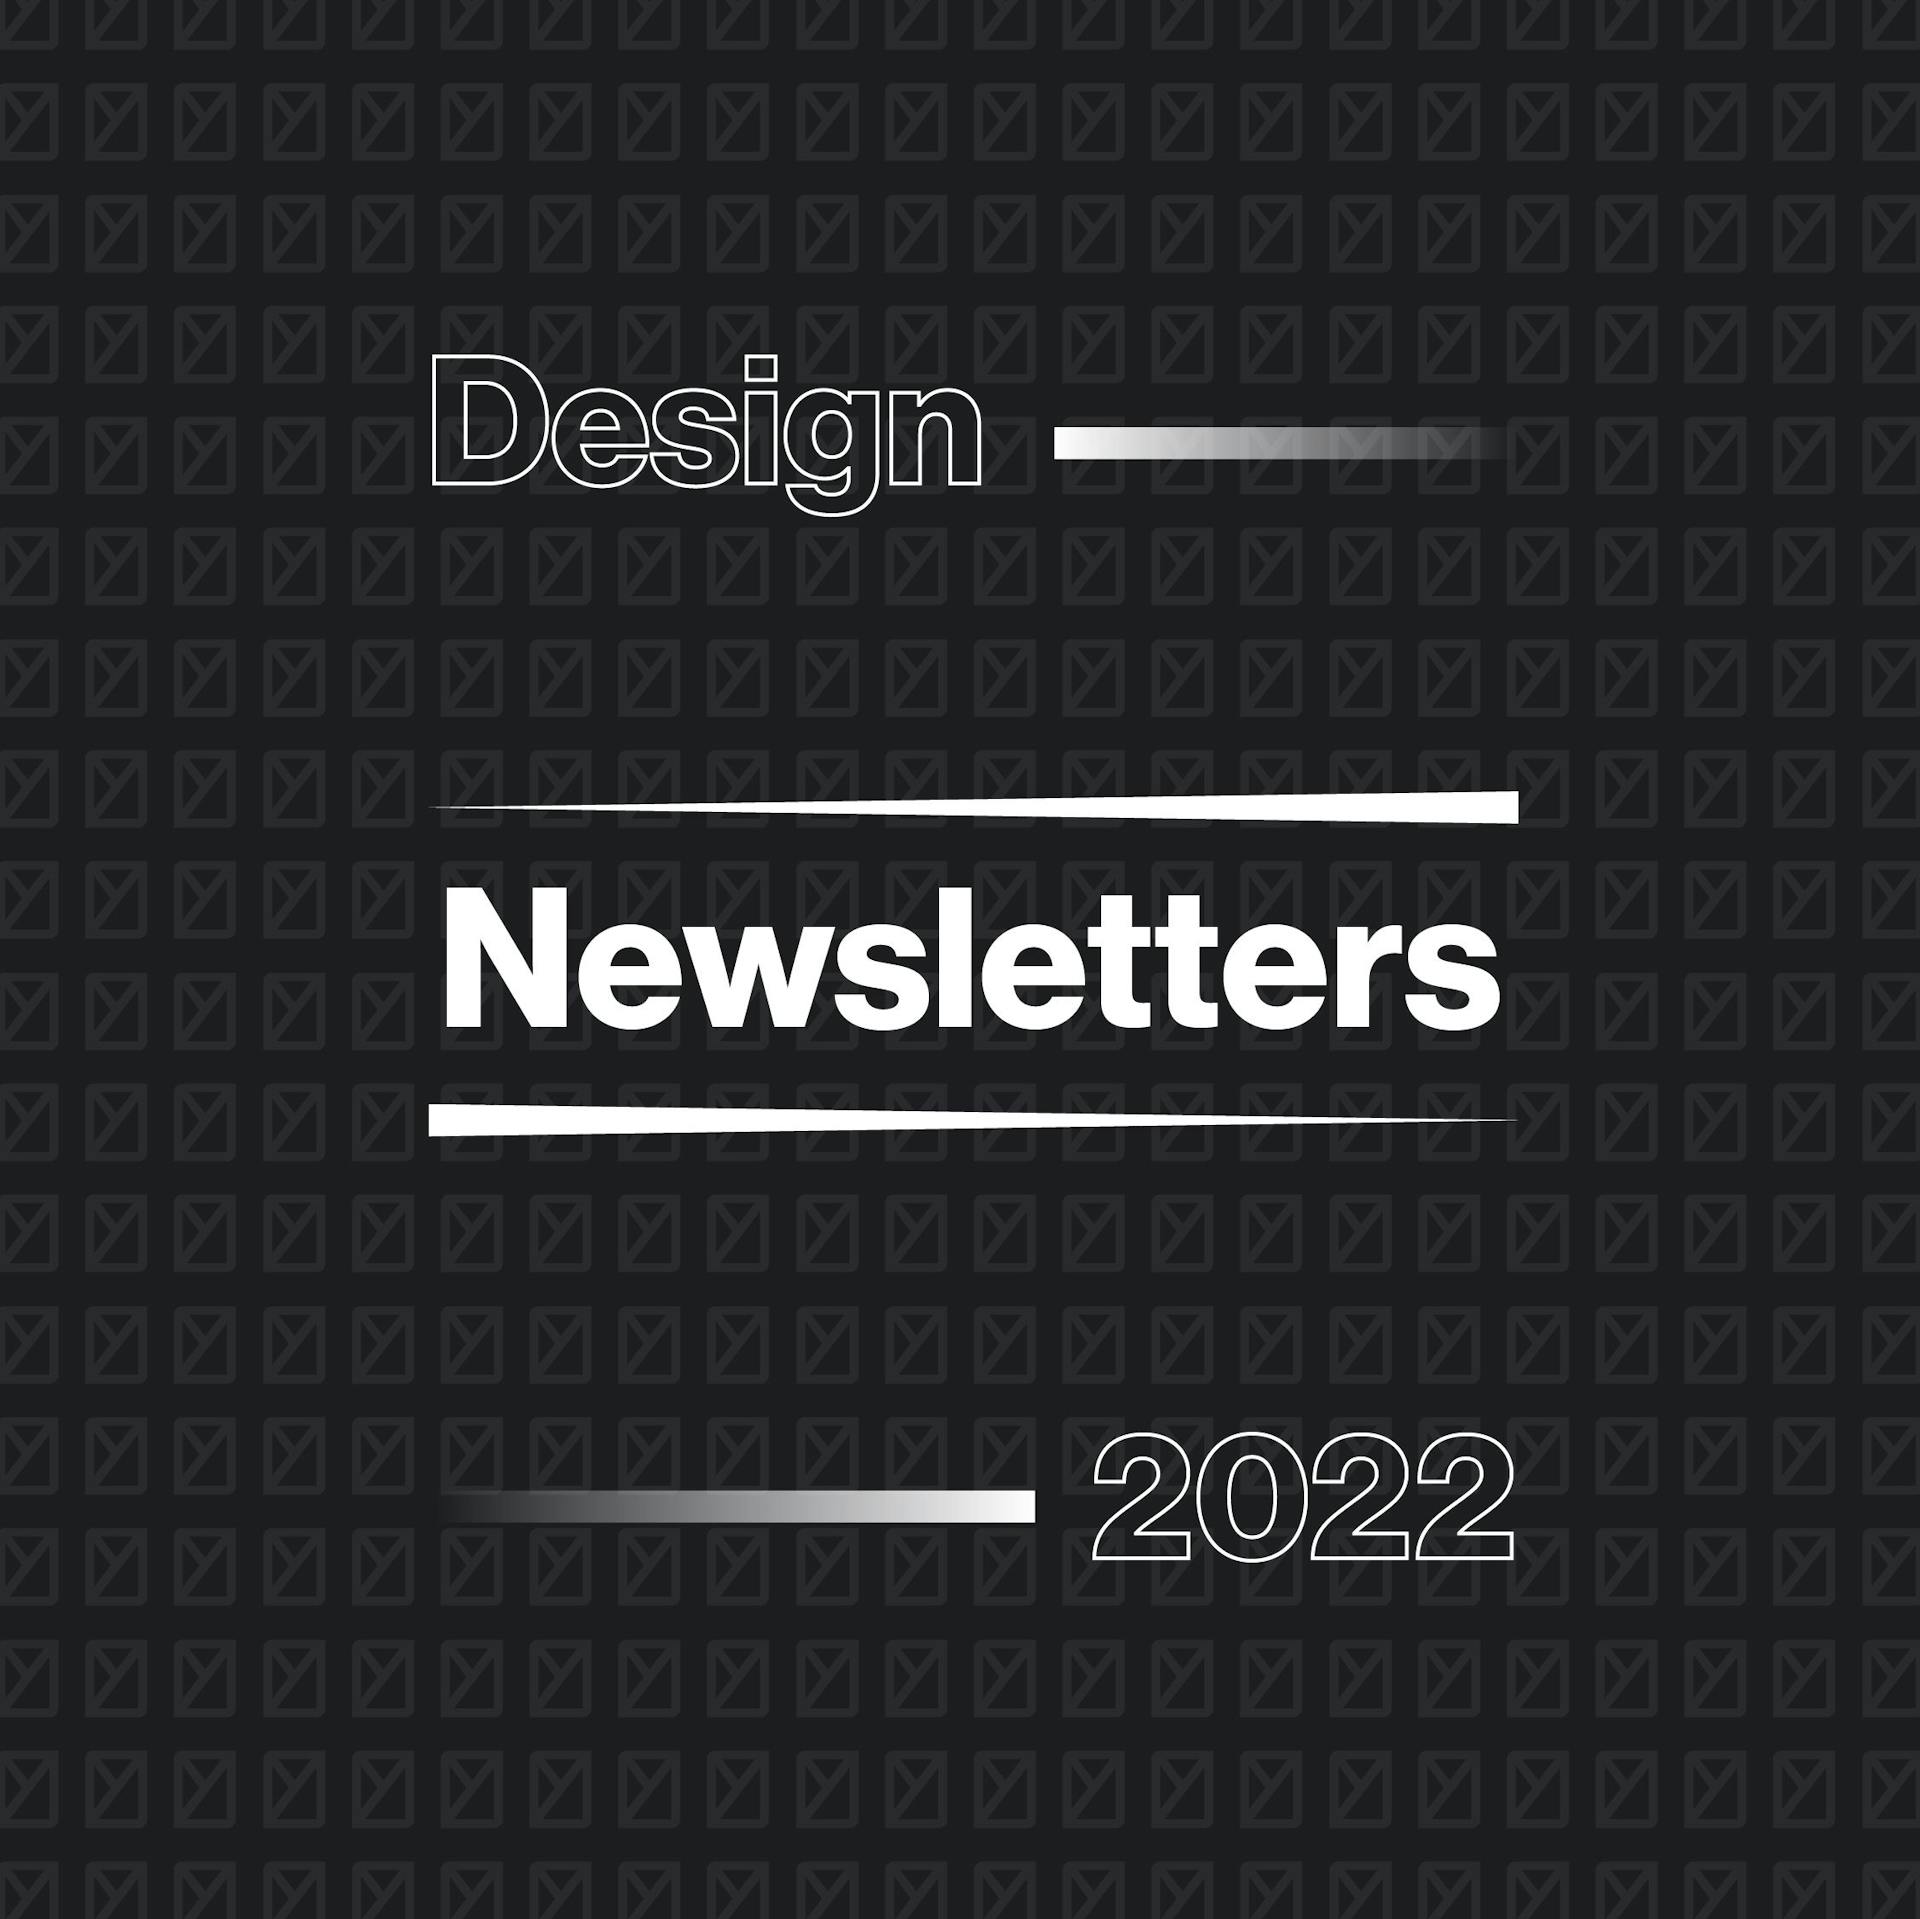 Newsletter Design - Email Direct Marketing in 2022